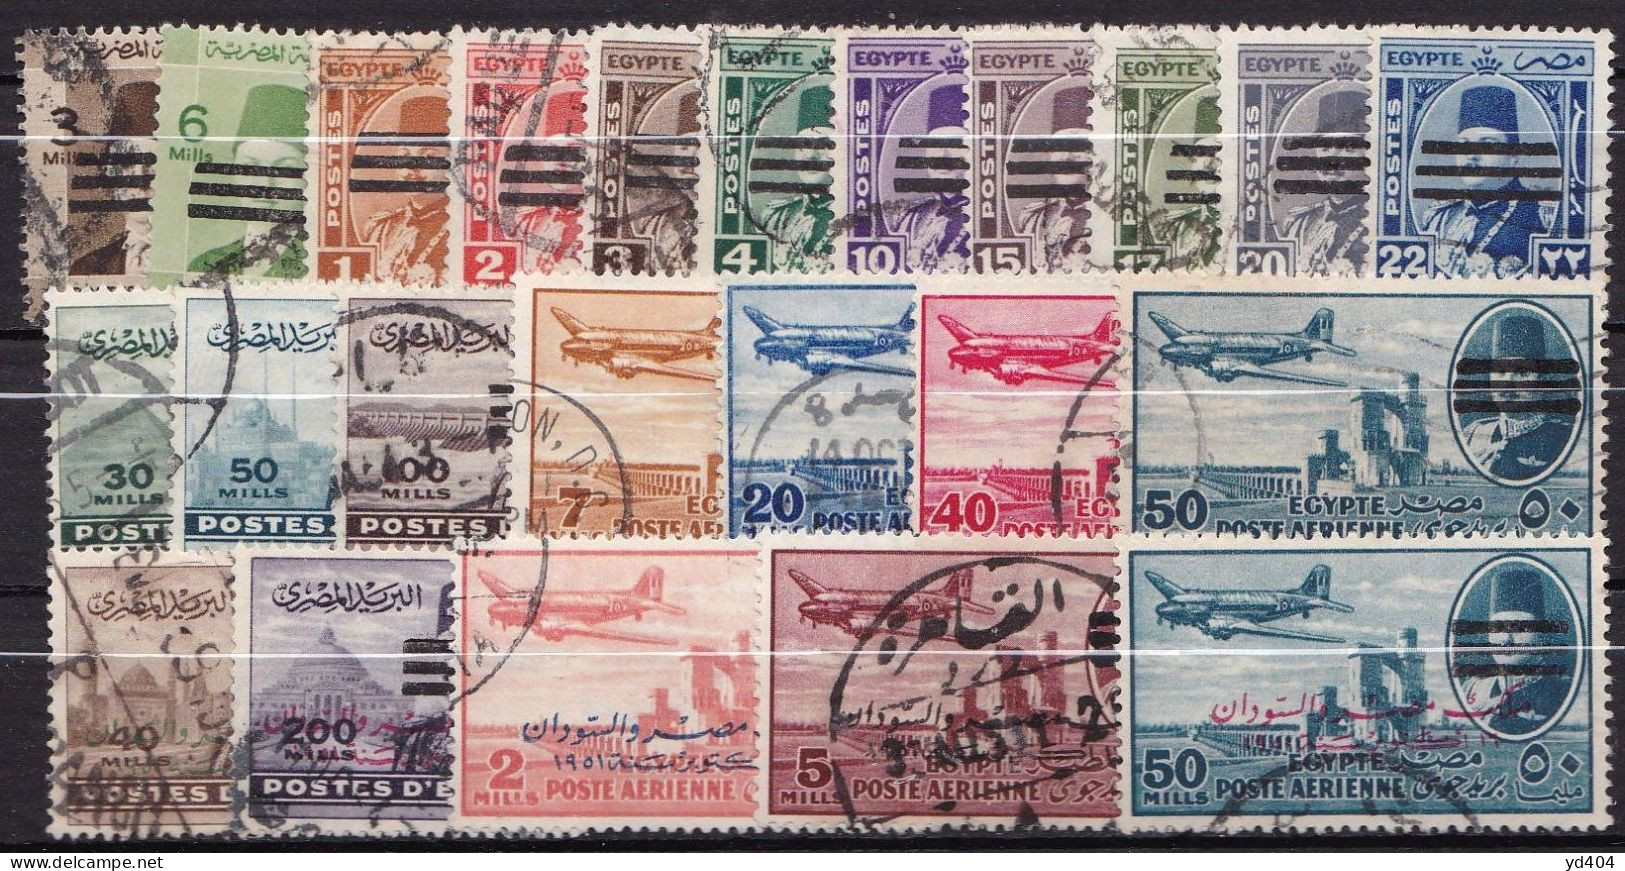 EG100 – EGYPTE – EGYPT – 1953 – 3 BARS OBLITERATED SET – SG # 436-489 USED 26 € - Used Stamps